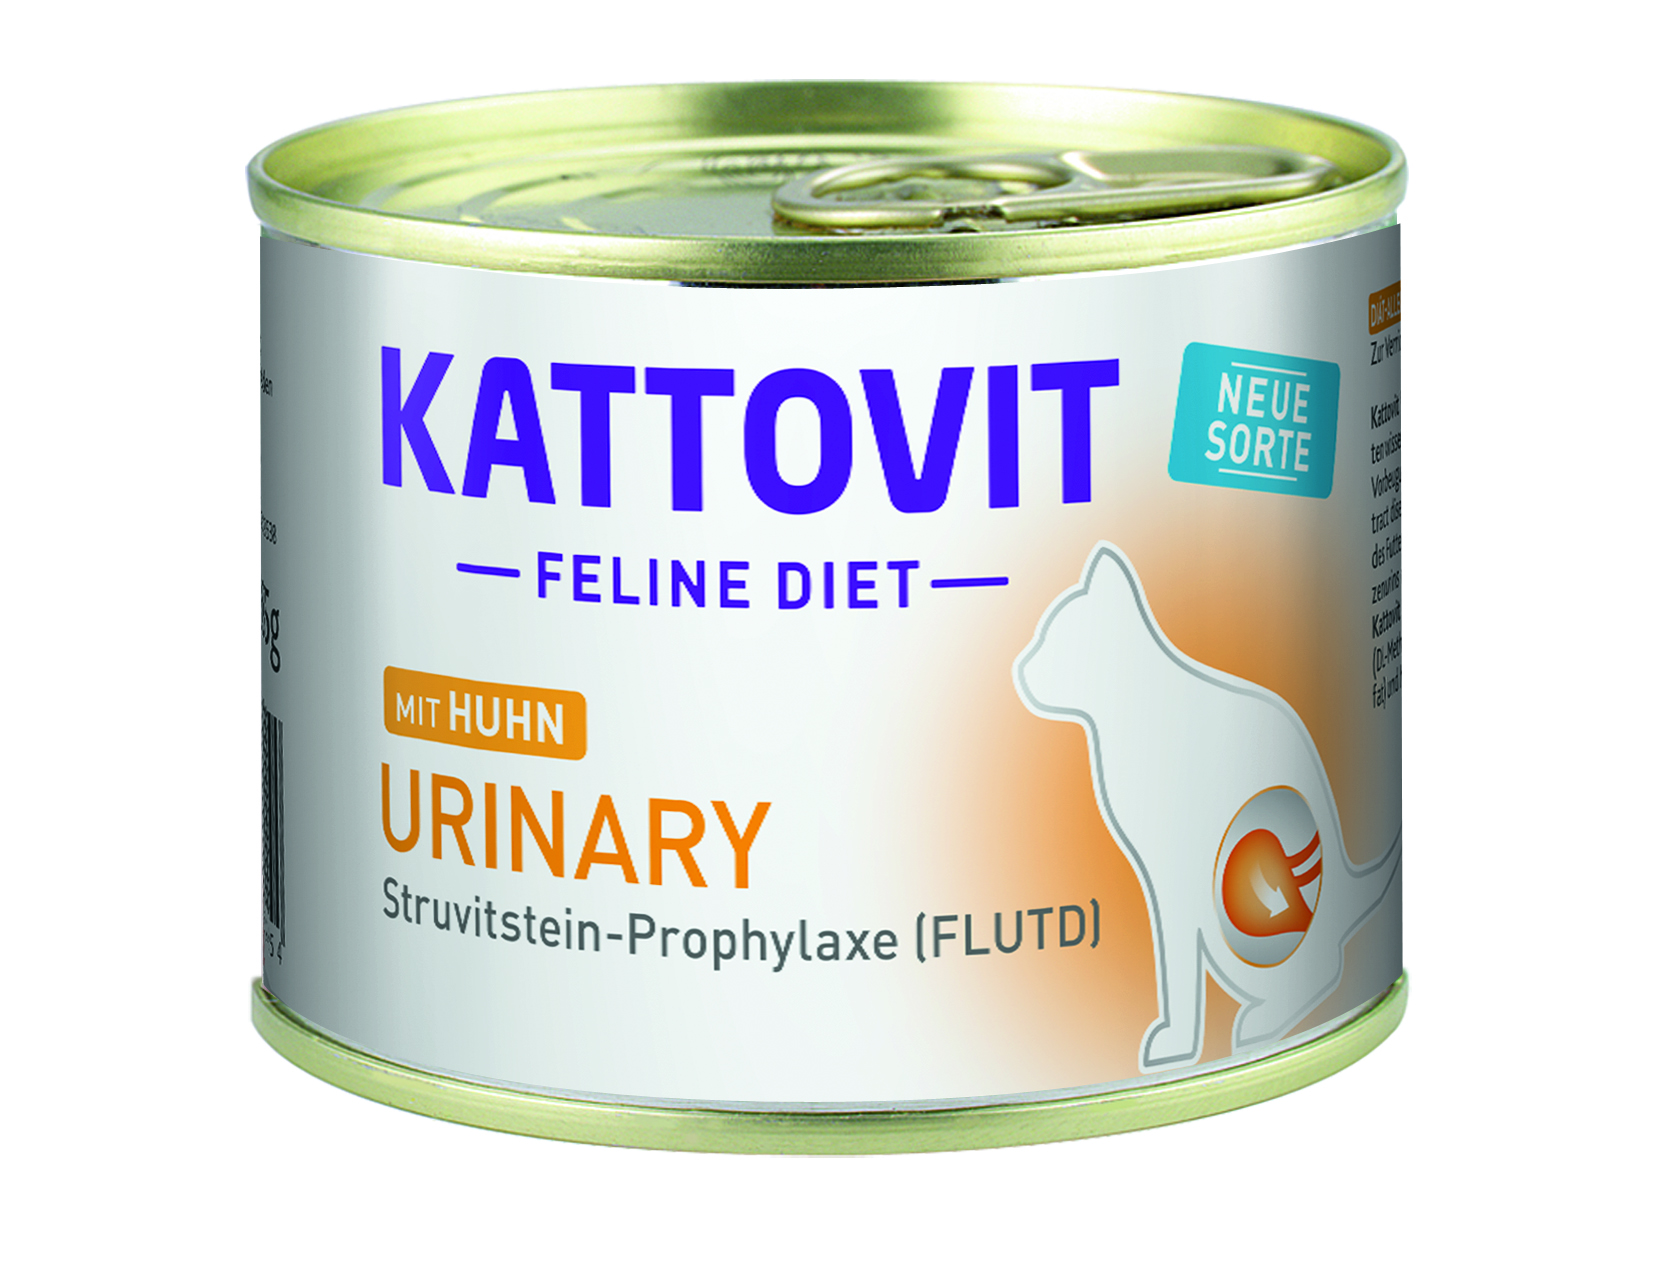 Kattovit Feline Diet Urinary Huhn 185g